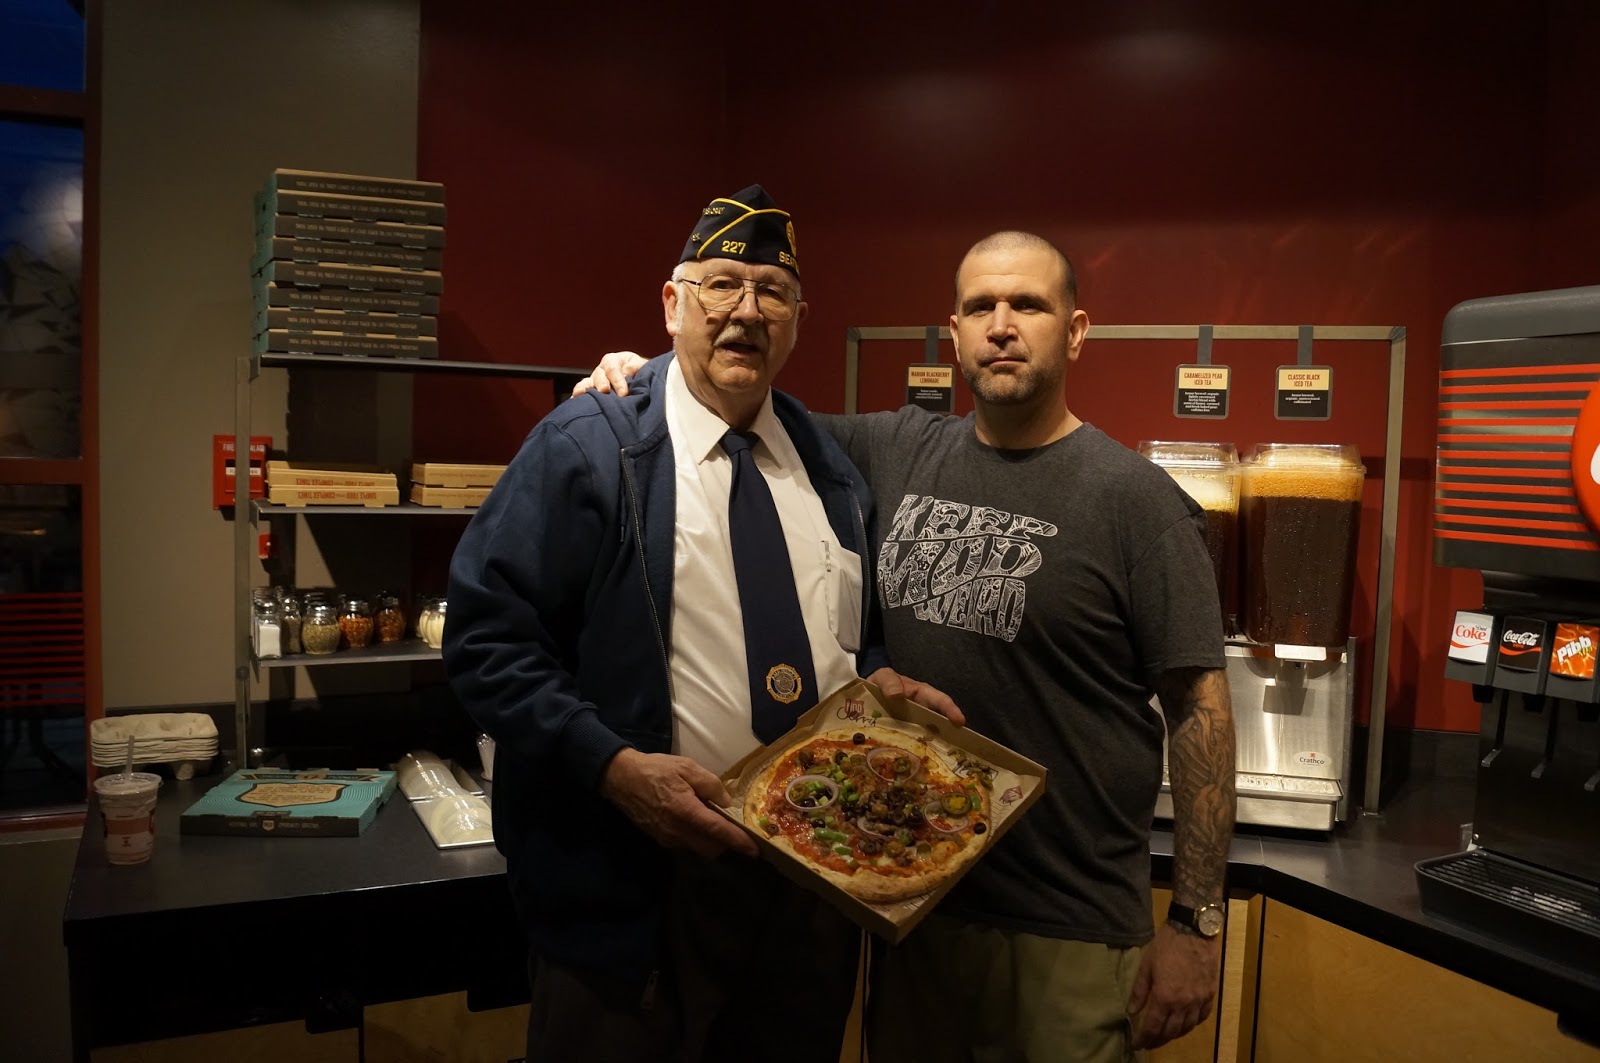 Shoreline Area News Photo MOD gives free pizza to veterans on Veteran